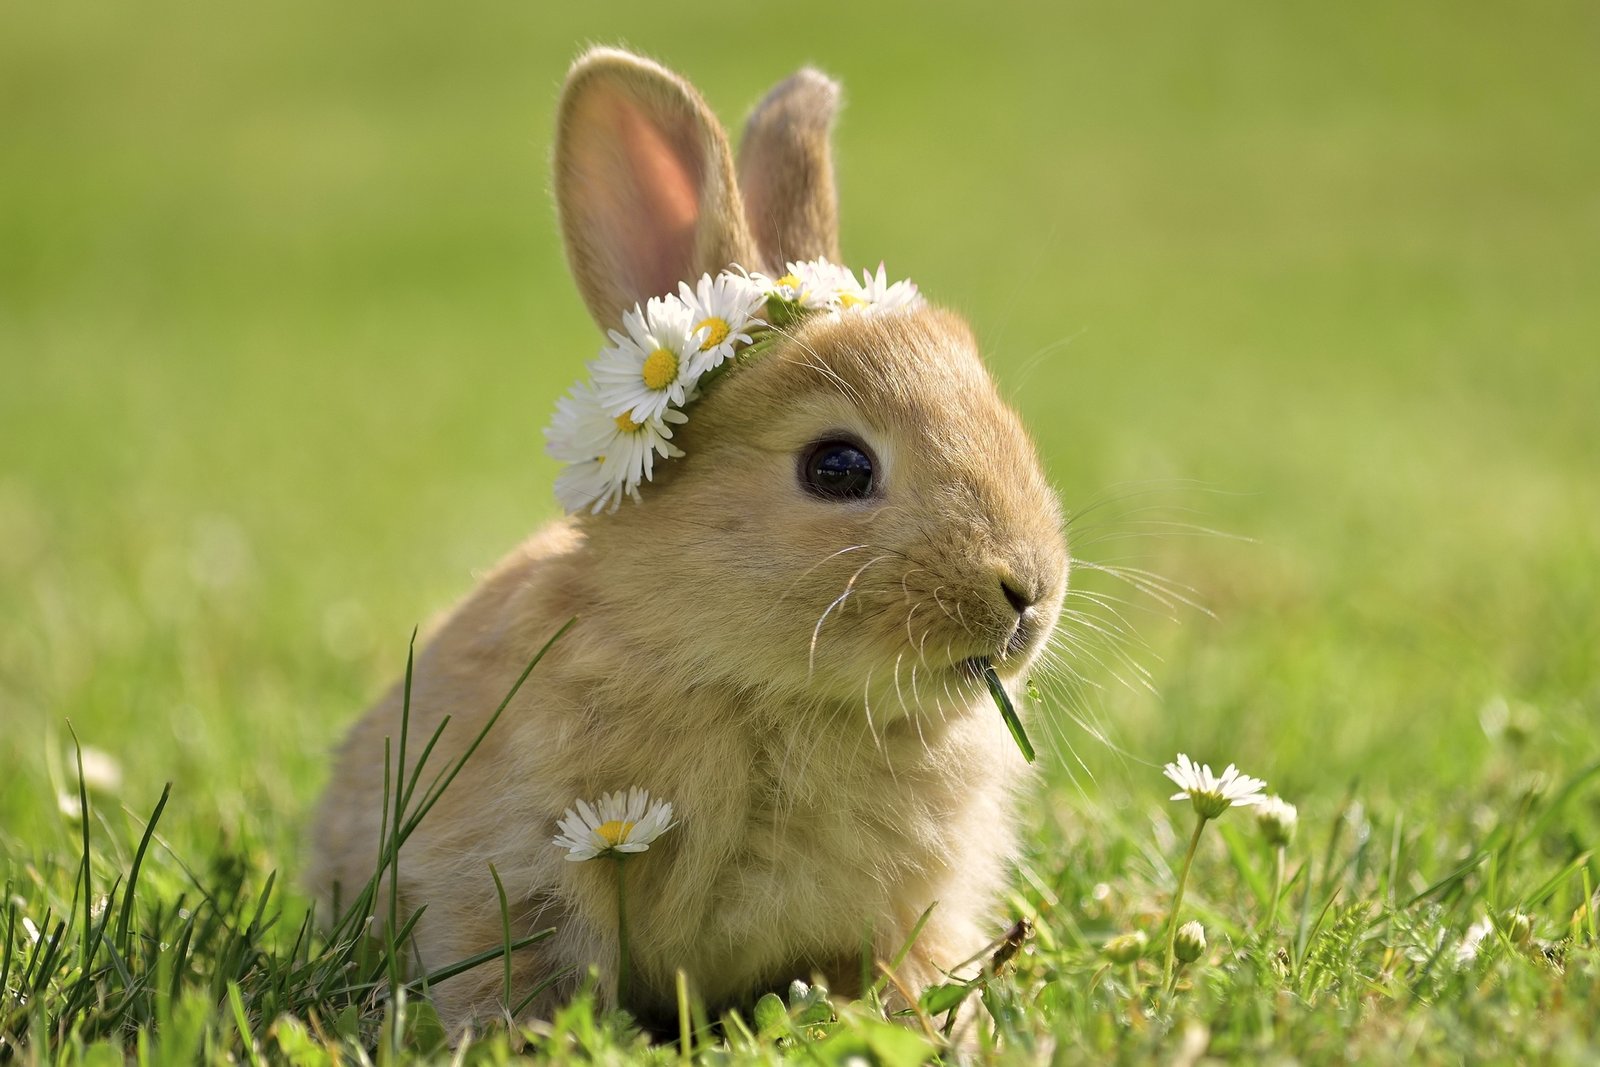 flowers that rabbits like